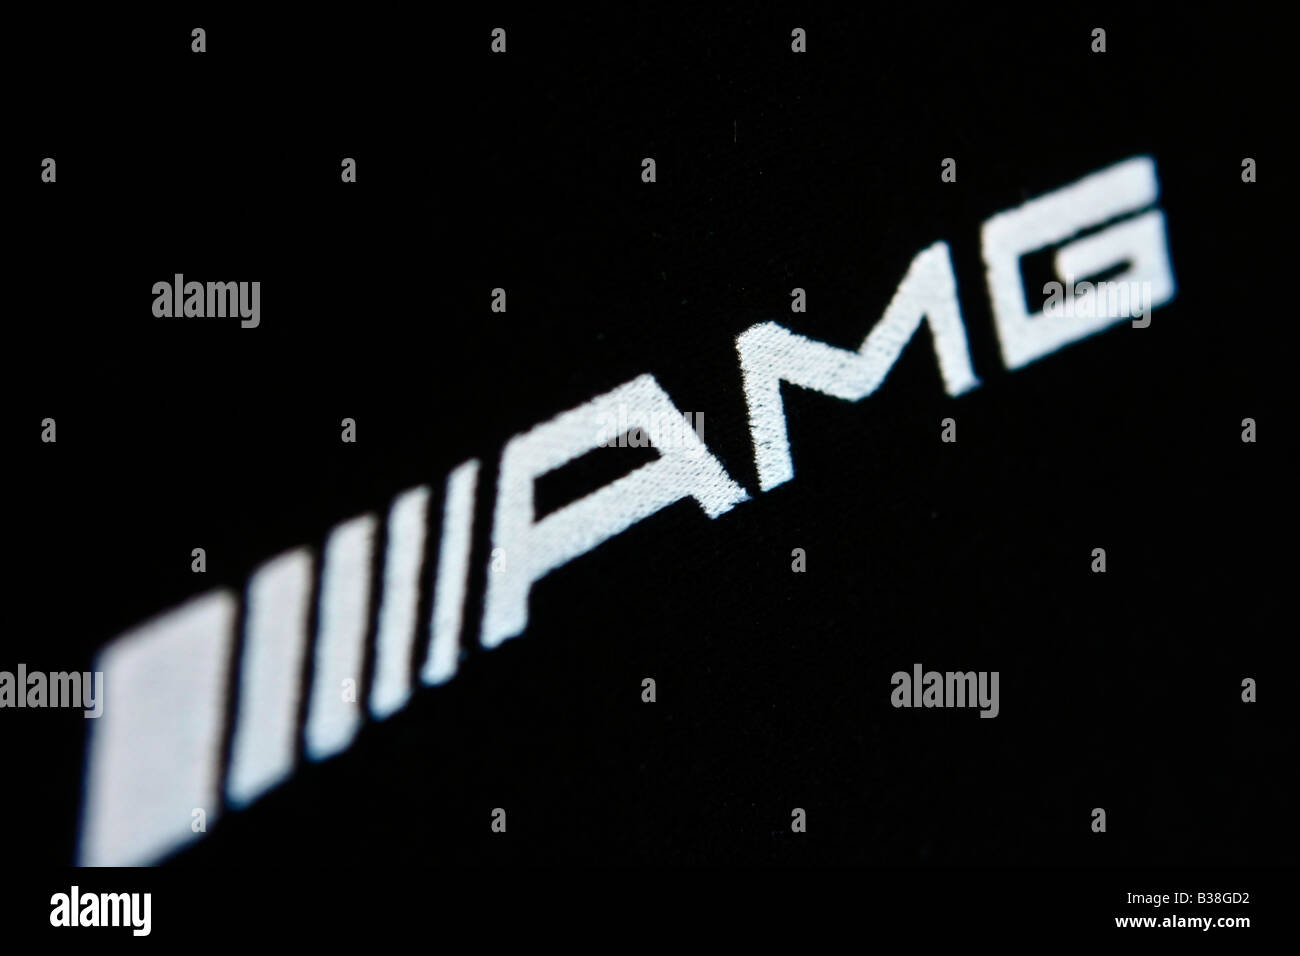 mercedes benz AMG logo Stock Photo - Alamy